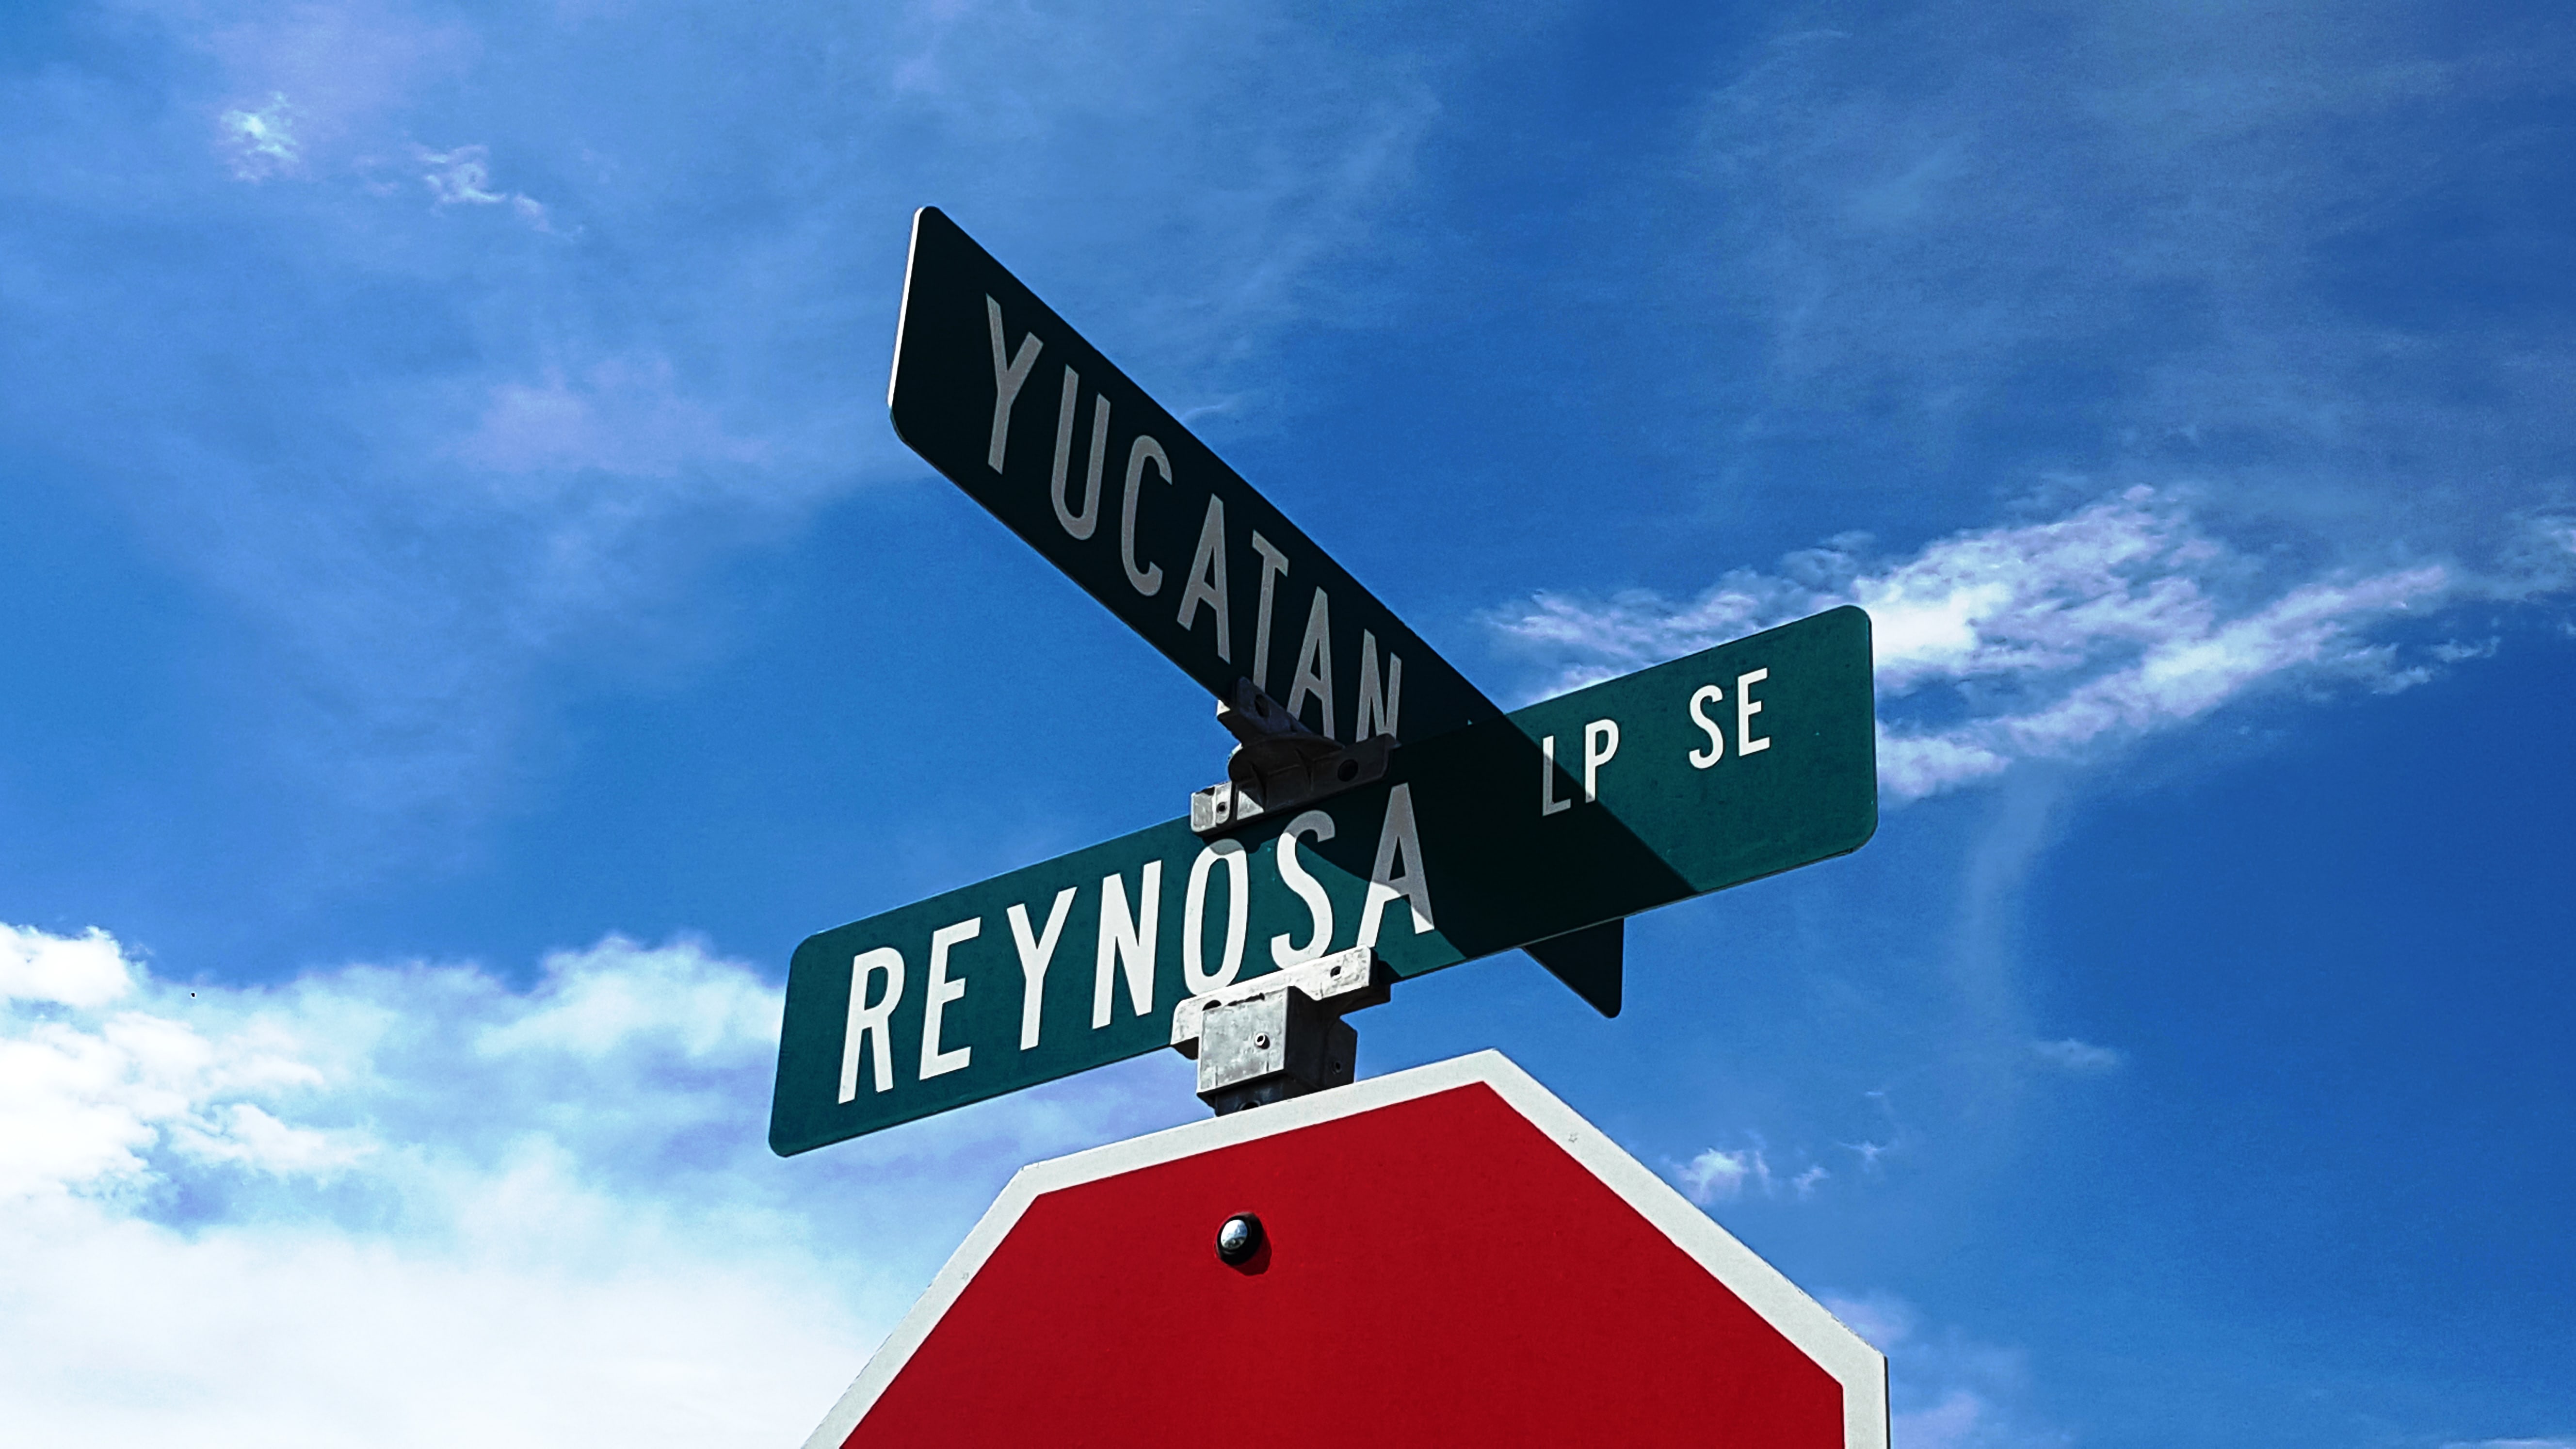 Yucatan Cabezon